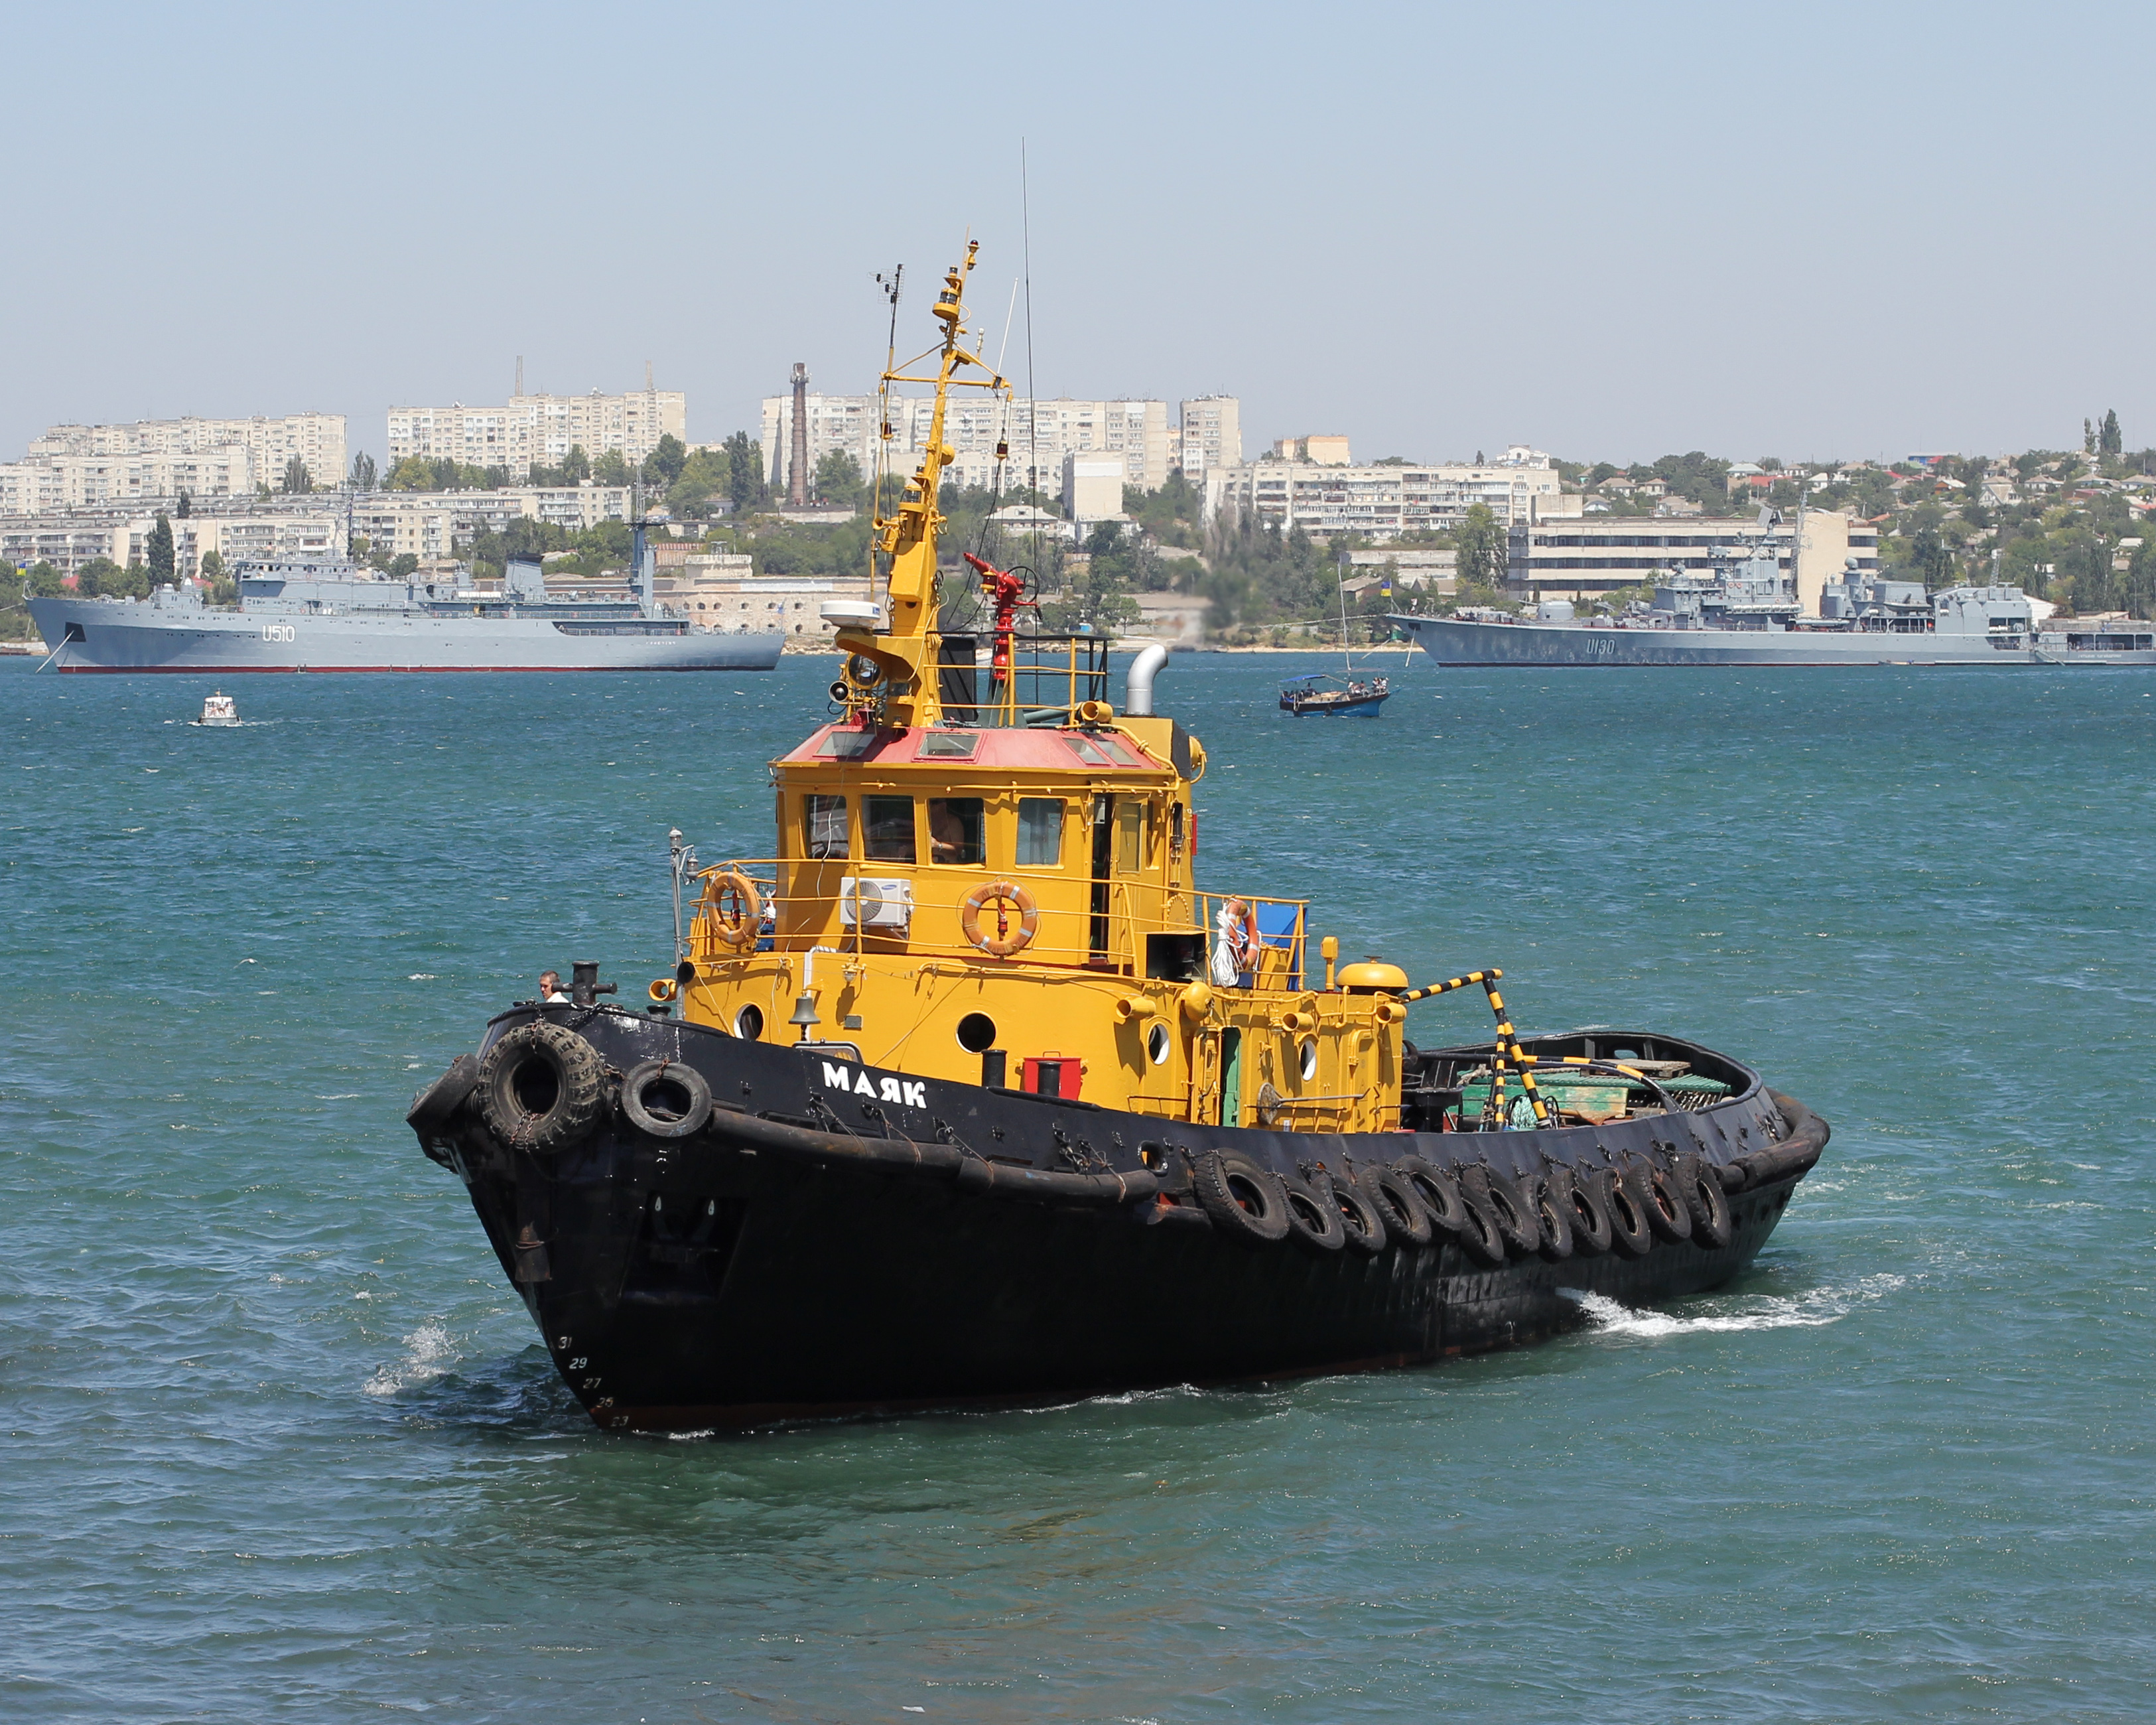 File:Tugboat Mayak 2012 G1.jpg - Wikimedia Commons